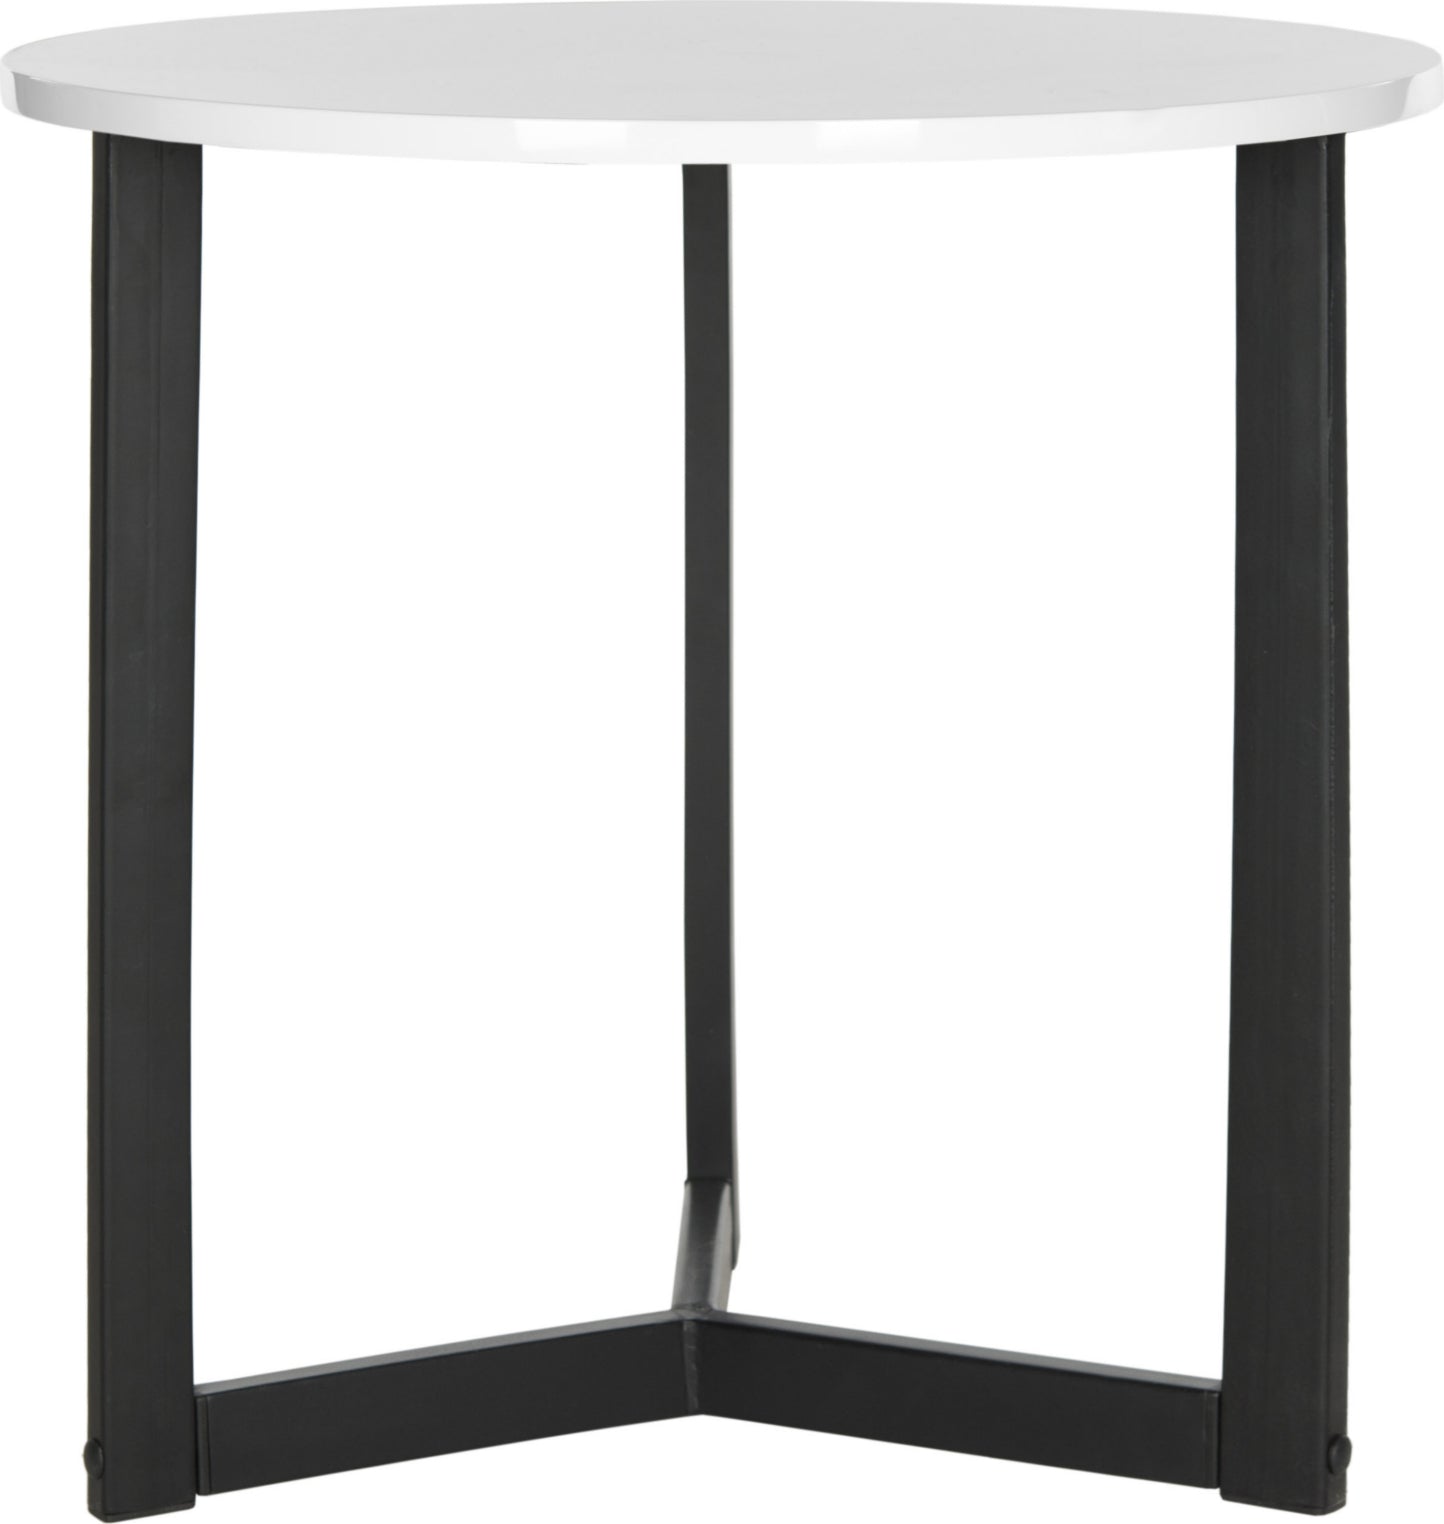 Safavieh Leonard Mid Century Modern Wood End Table White and Black Furniture main image